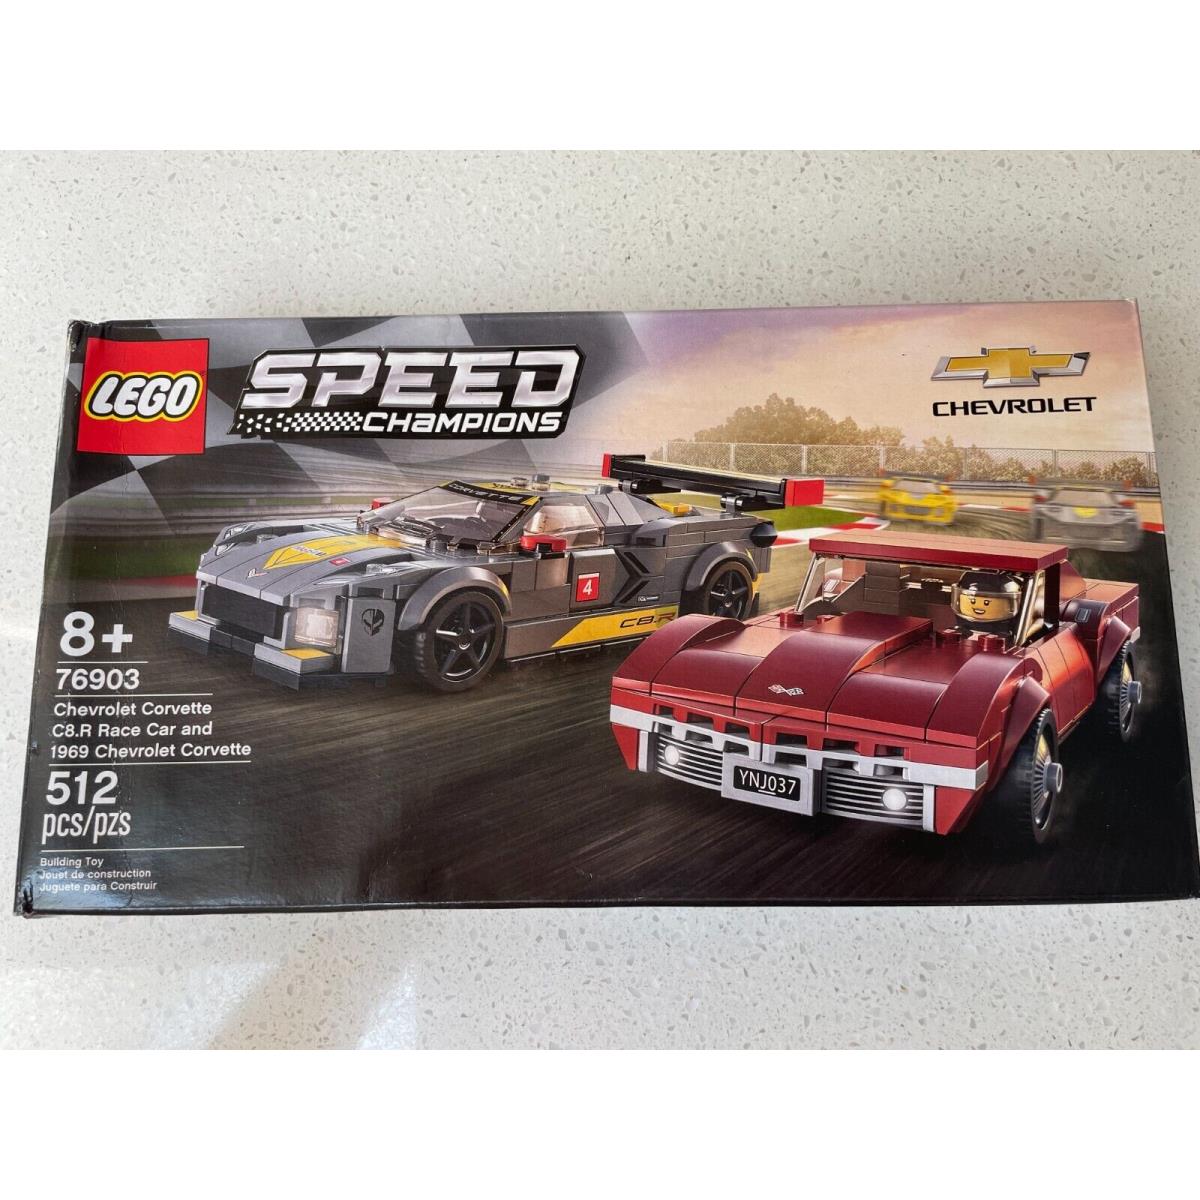 Lego Misprint 76903 Speed Champions C8R Race Car/1969 Chevy Corvette S/b 1968